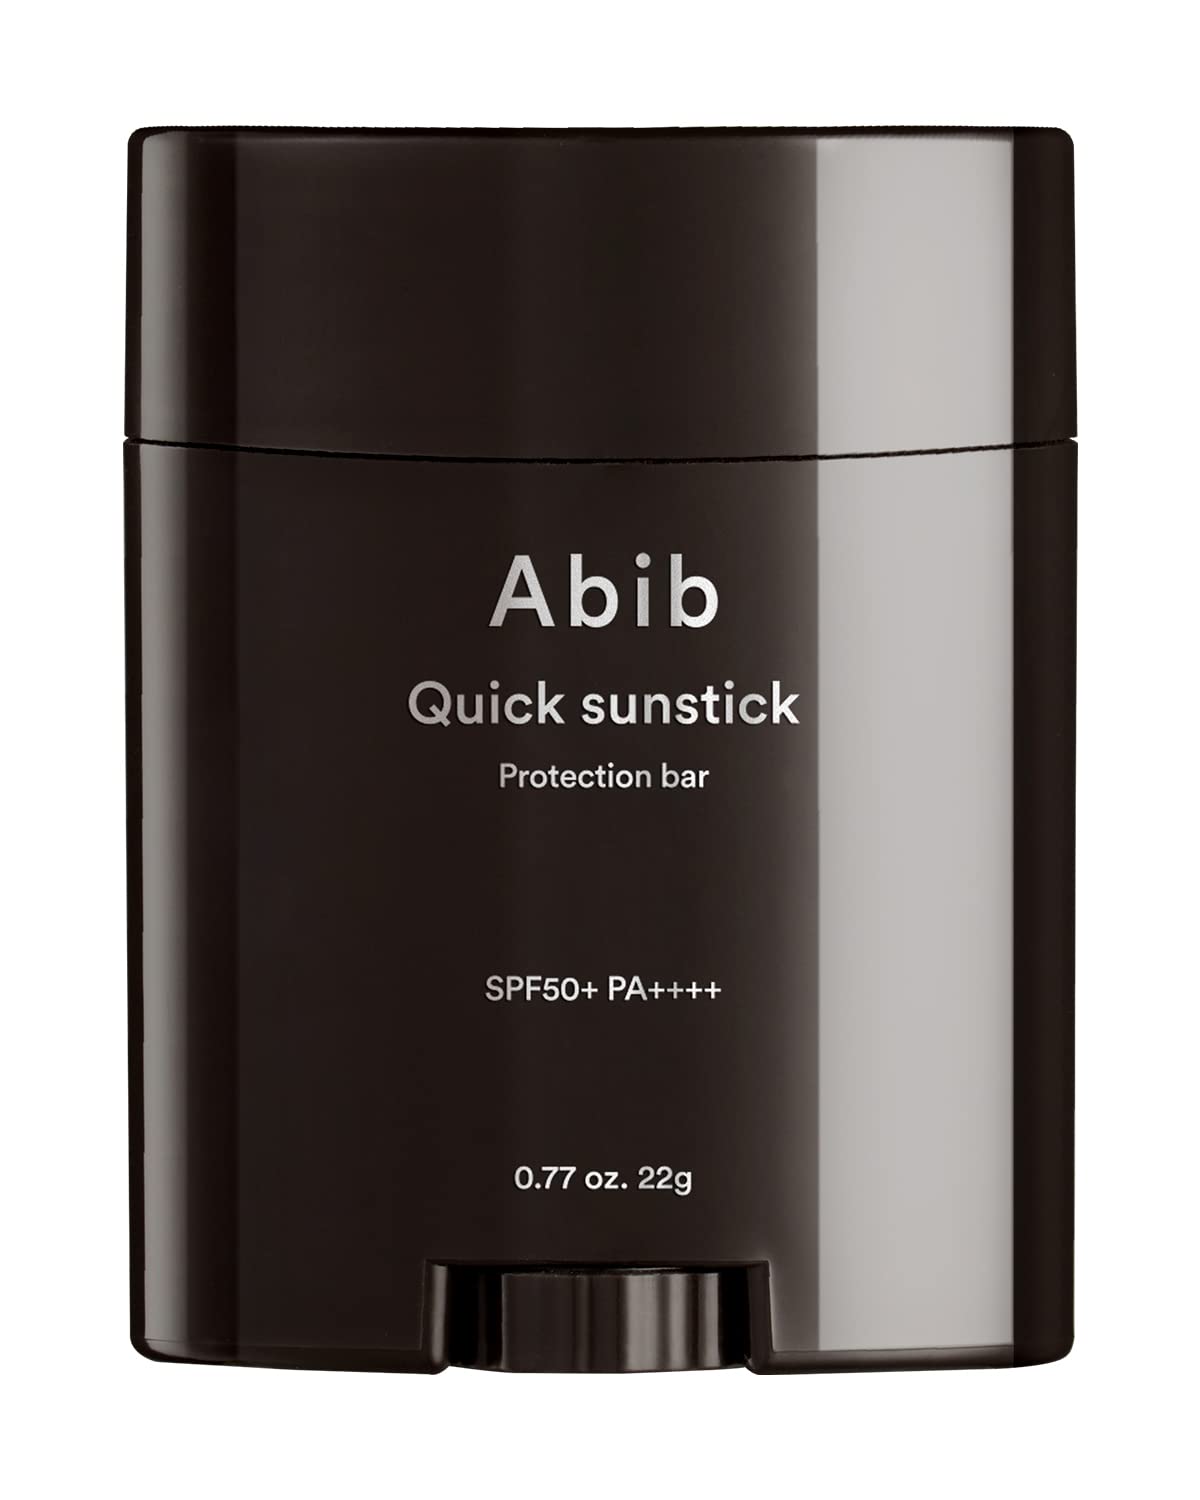 Abib: Quick Sunstick Protection Bar 22g